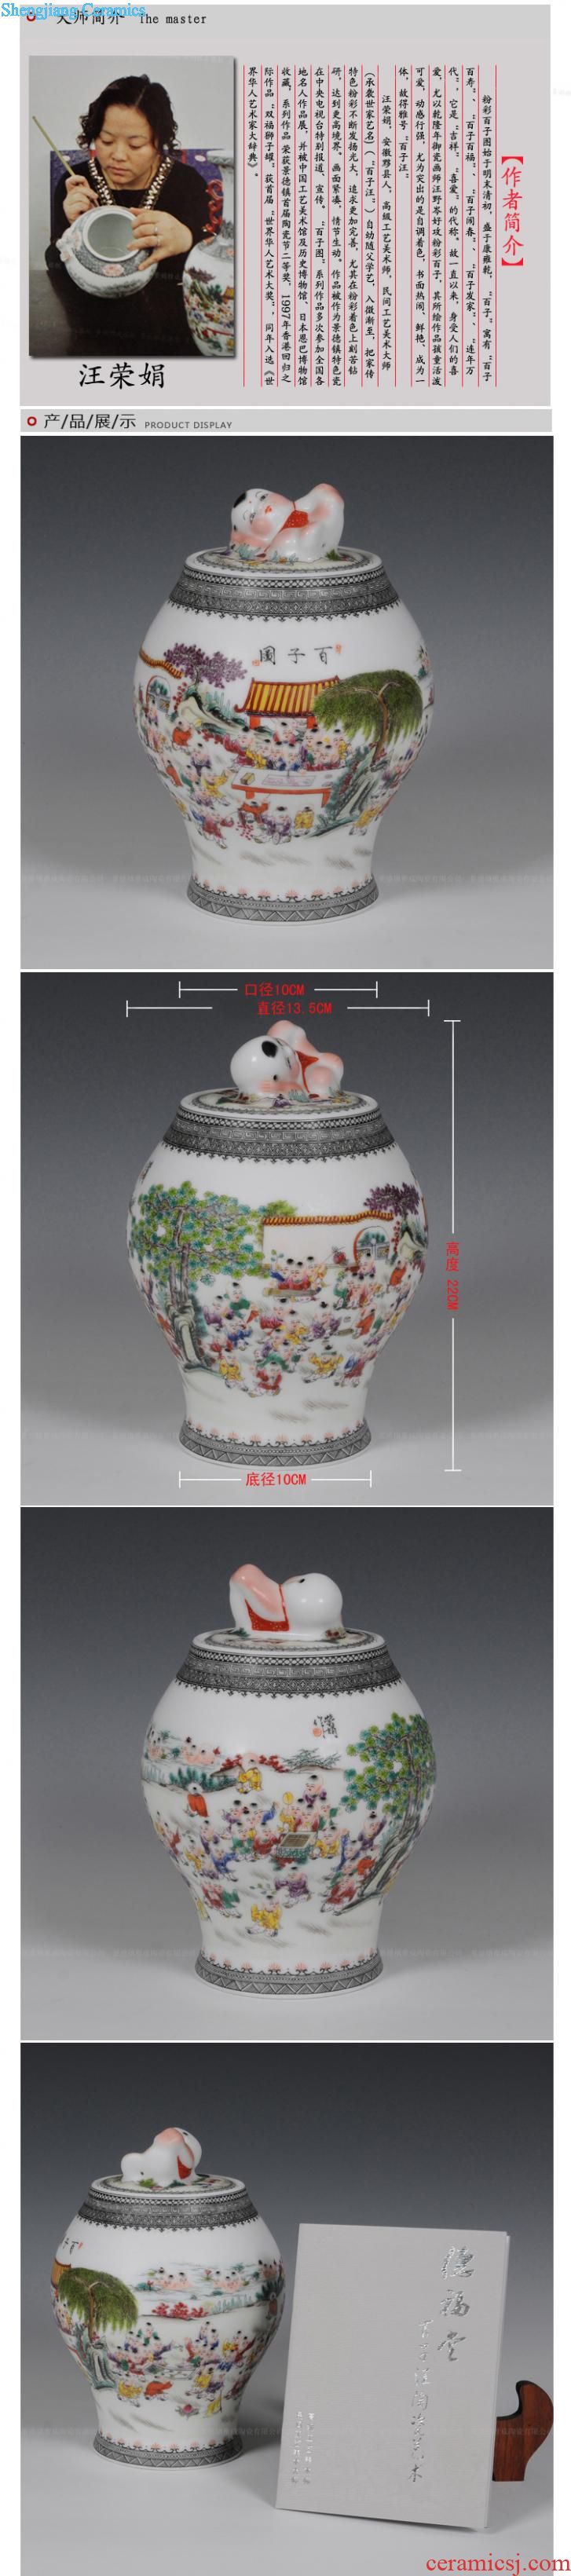 Jingdezhen ceramic POTS awake pu 'er tea caddy large manual home box sealed storage tank